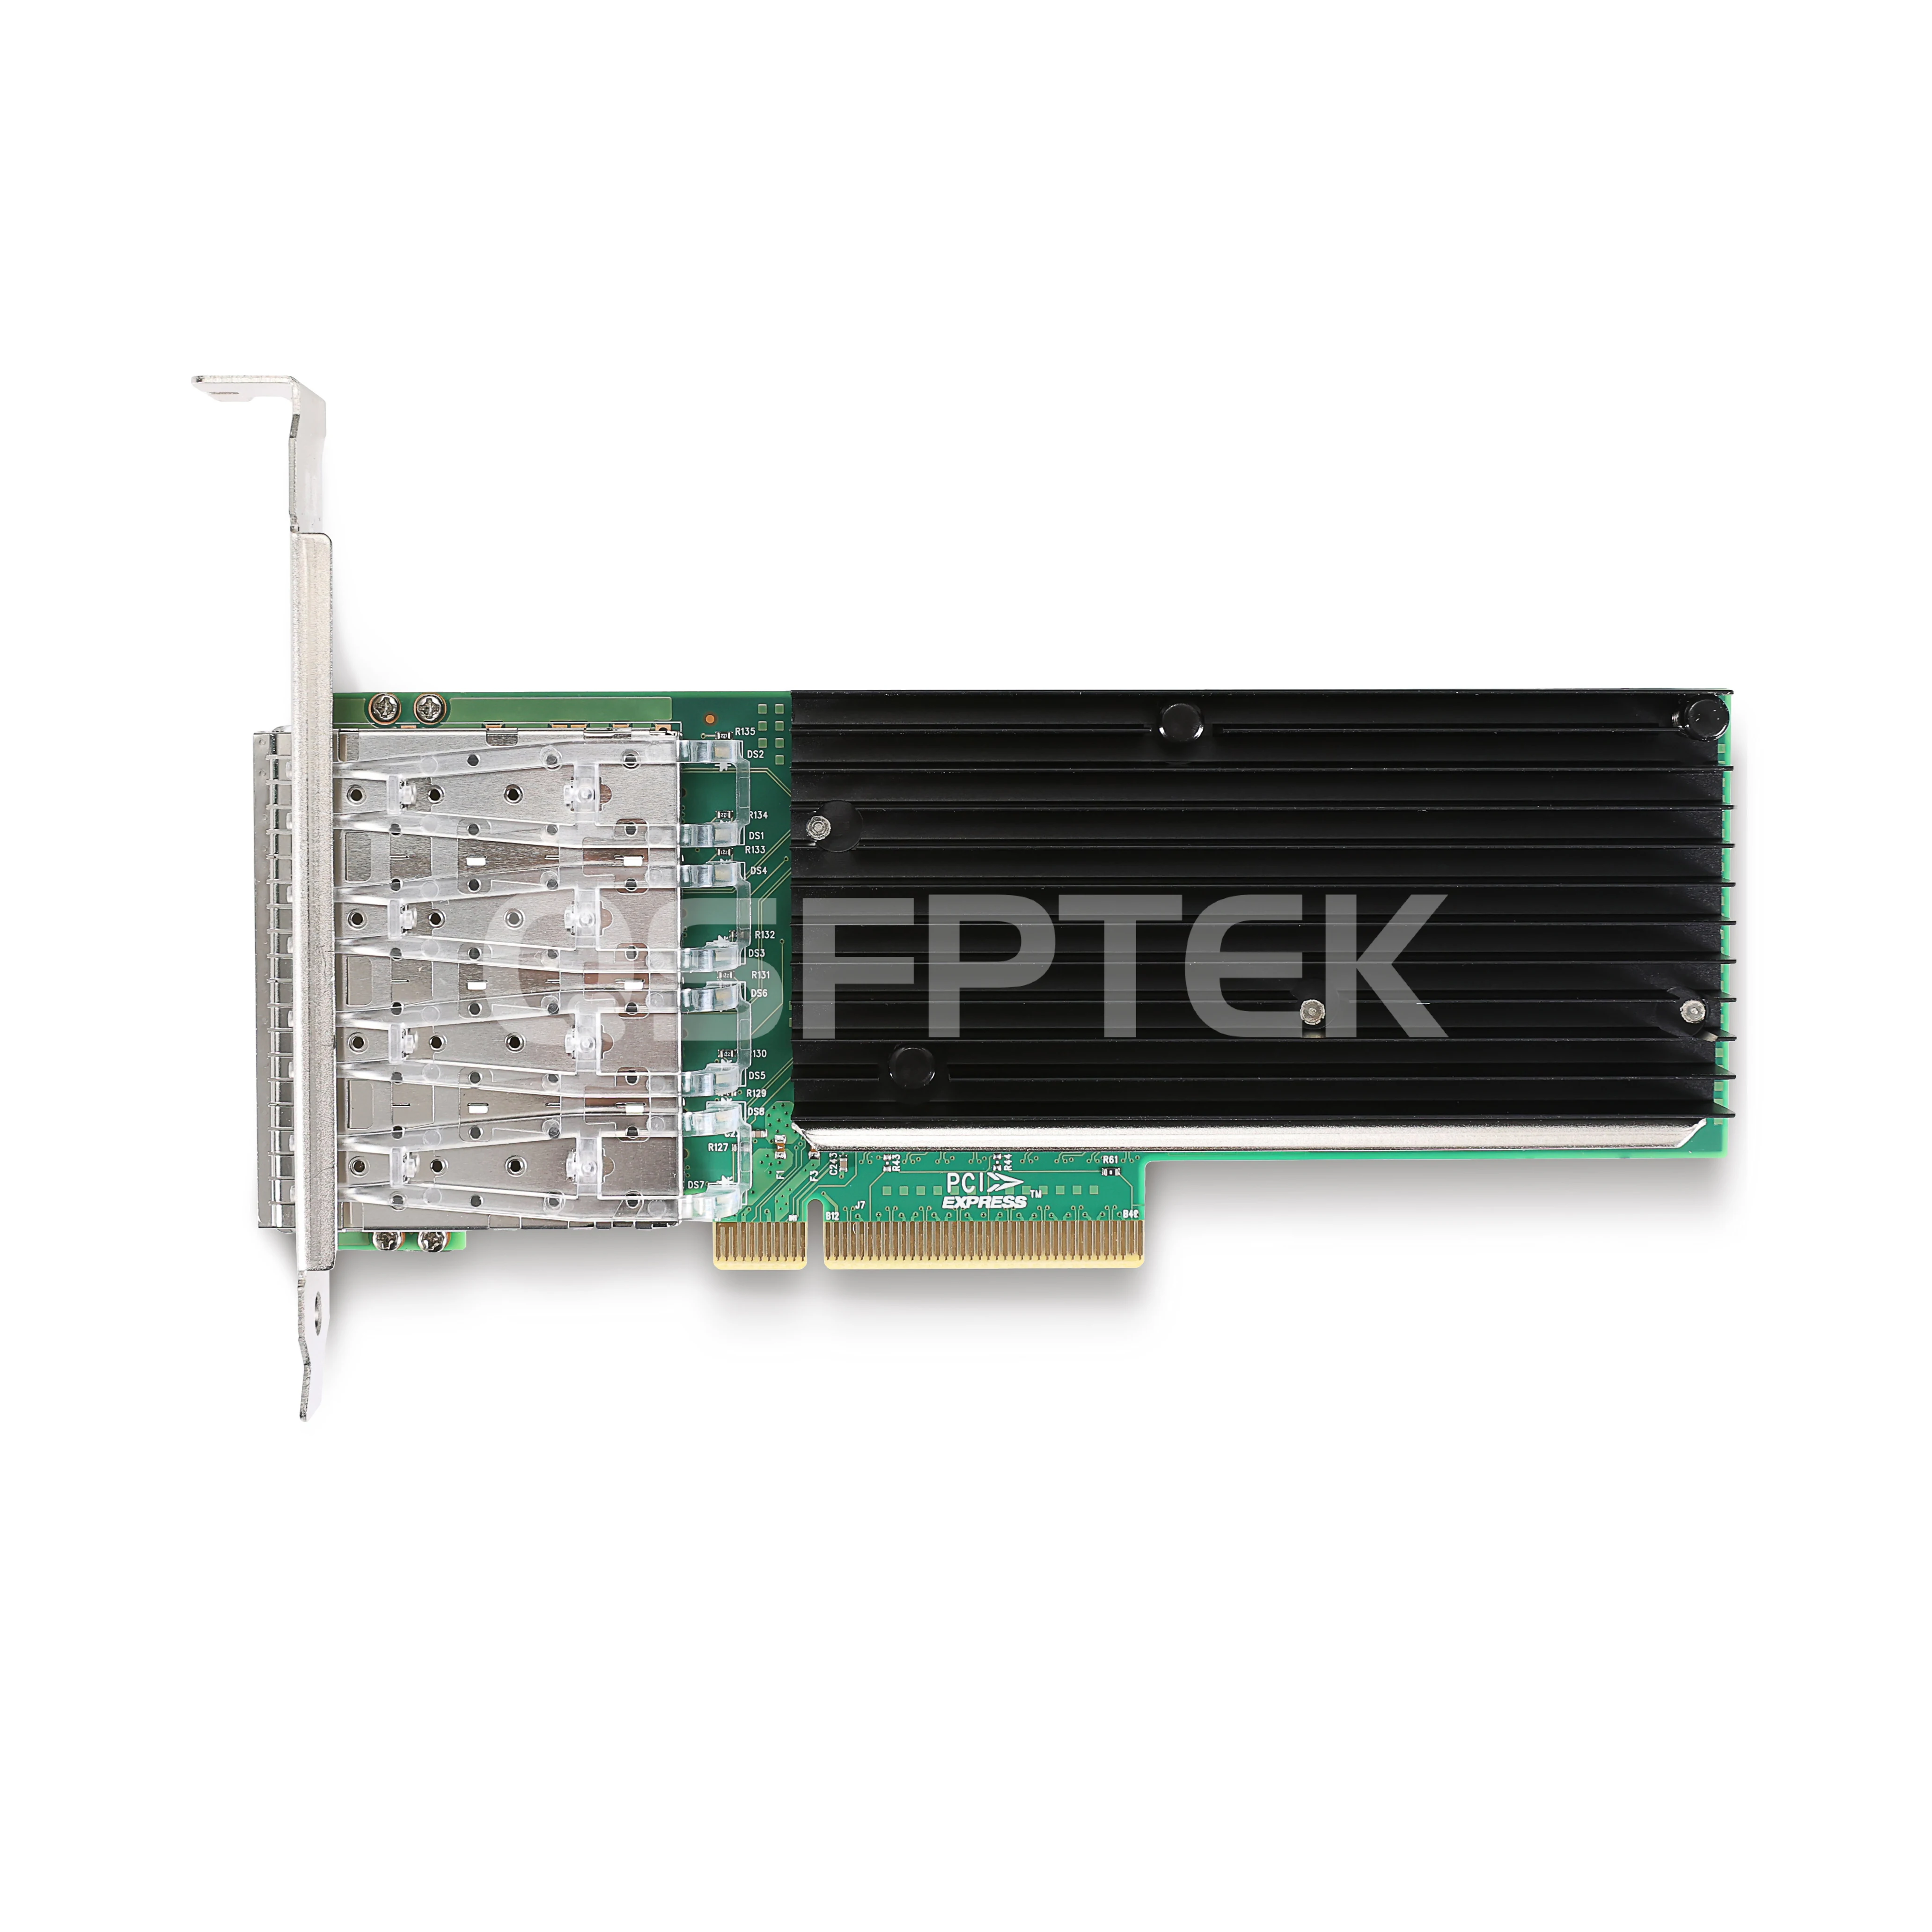 Intel X710-BM2 PCIe Network Interface Card, Dual-Port 10G SFP+ NIC